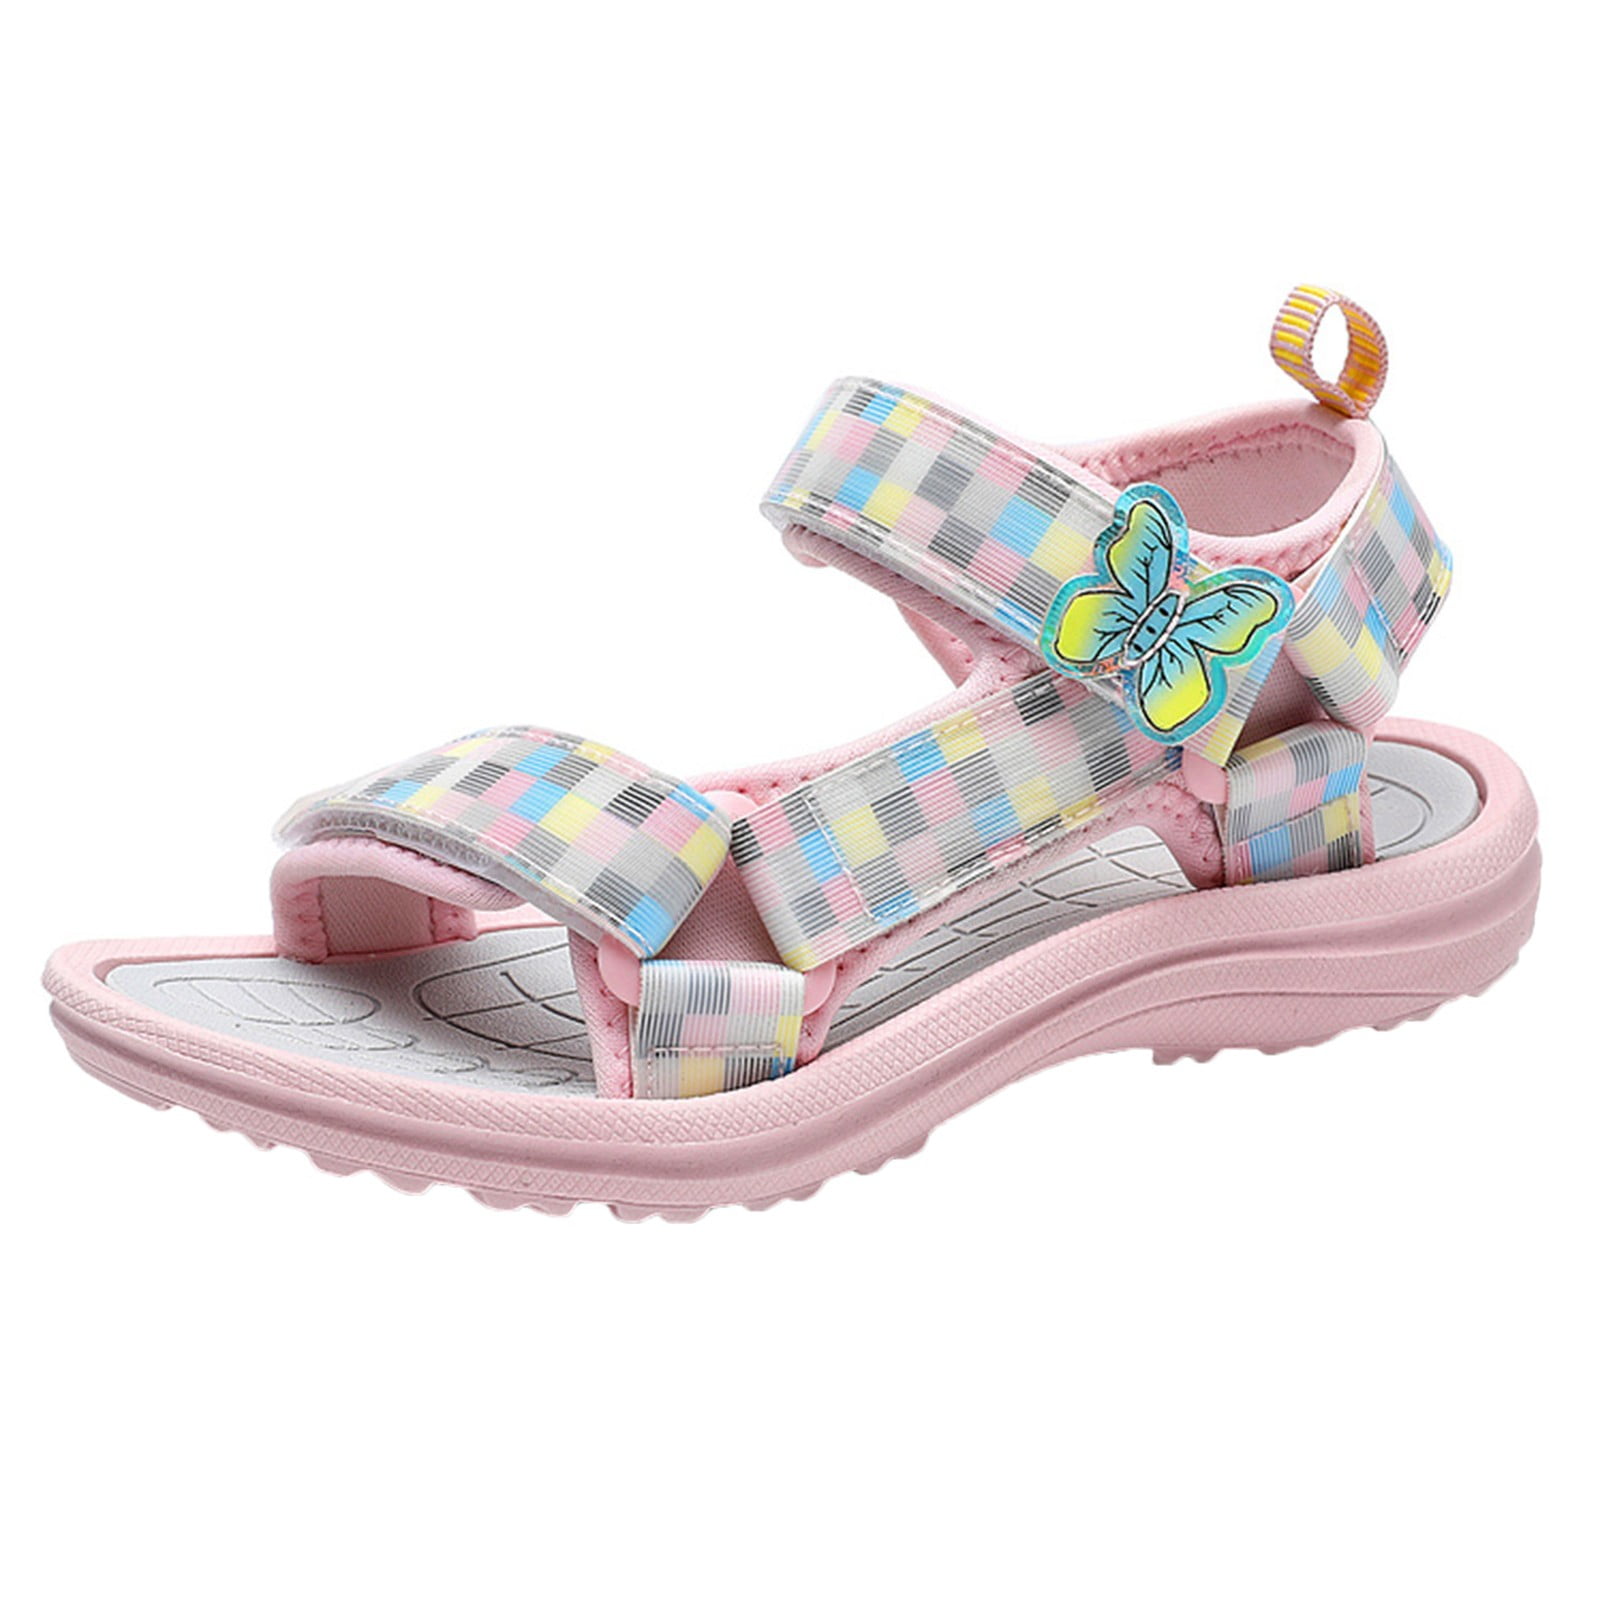 KaLI_store Girls' Sandals Toddler/Little Kid Girls Sandals Fashion Bow ...